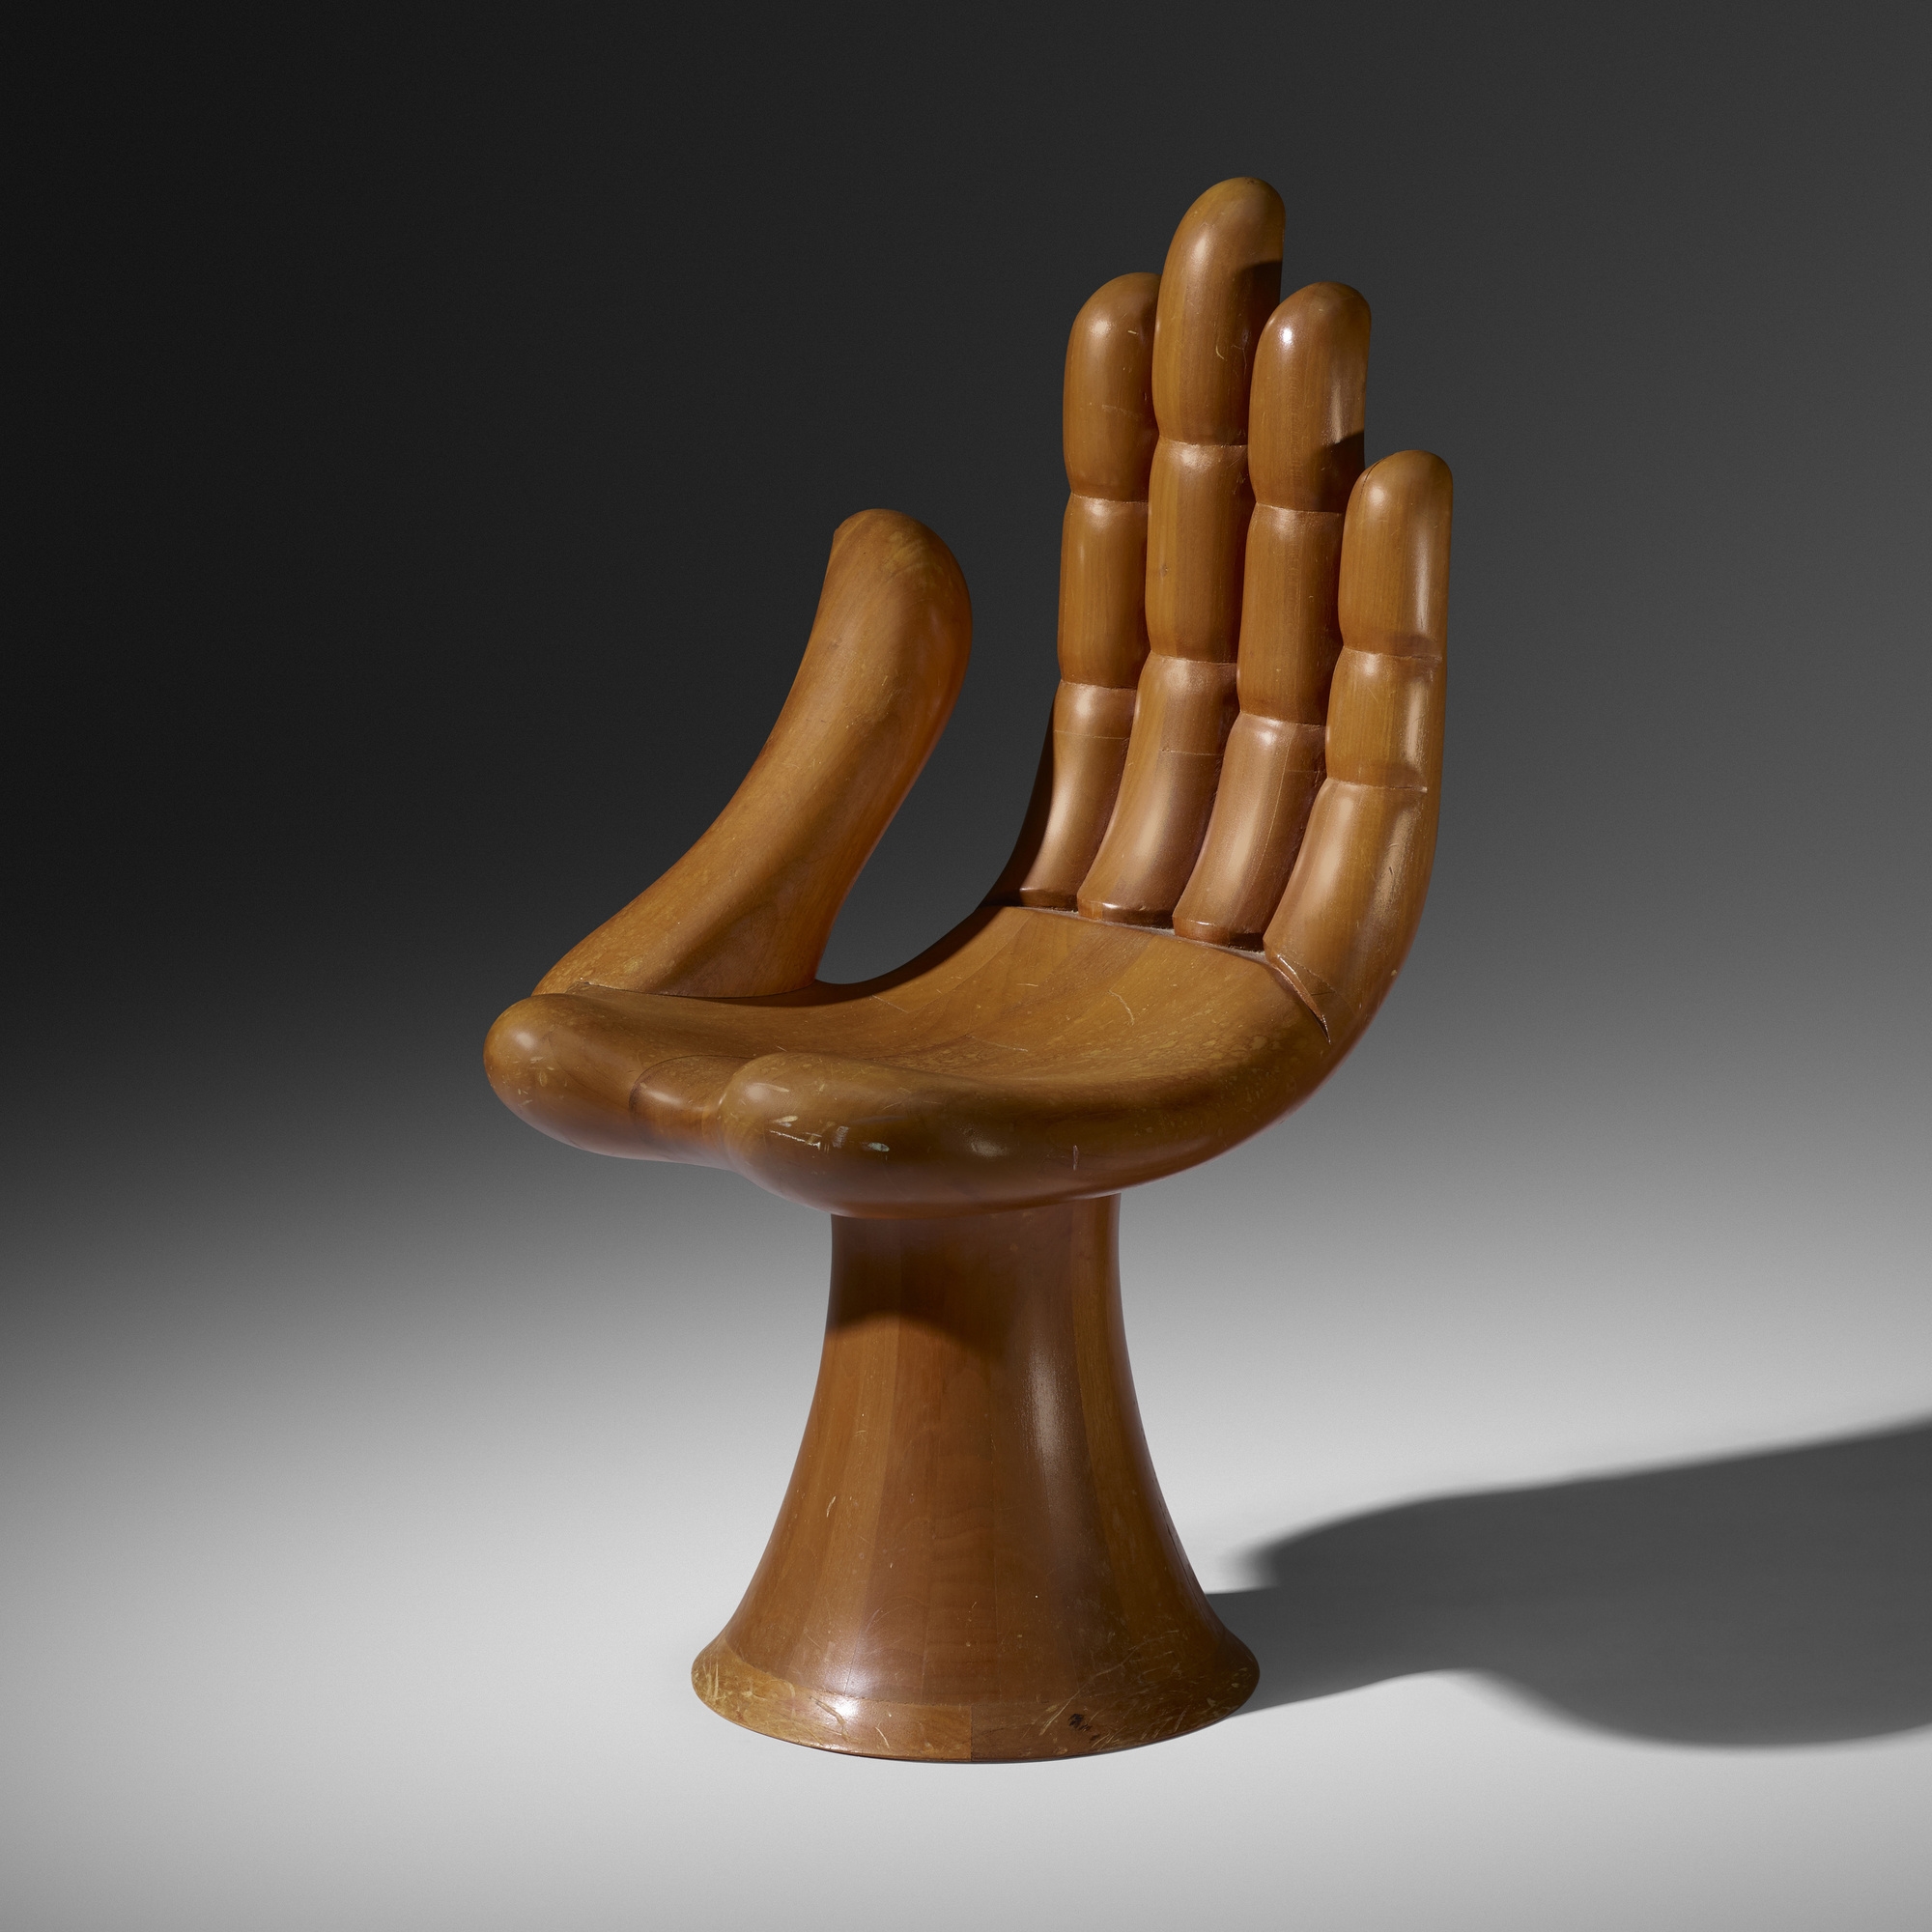 Hand chair by Pedro Friedeberg, circa 1965